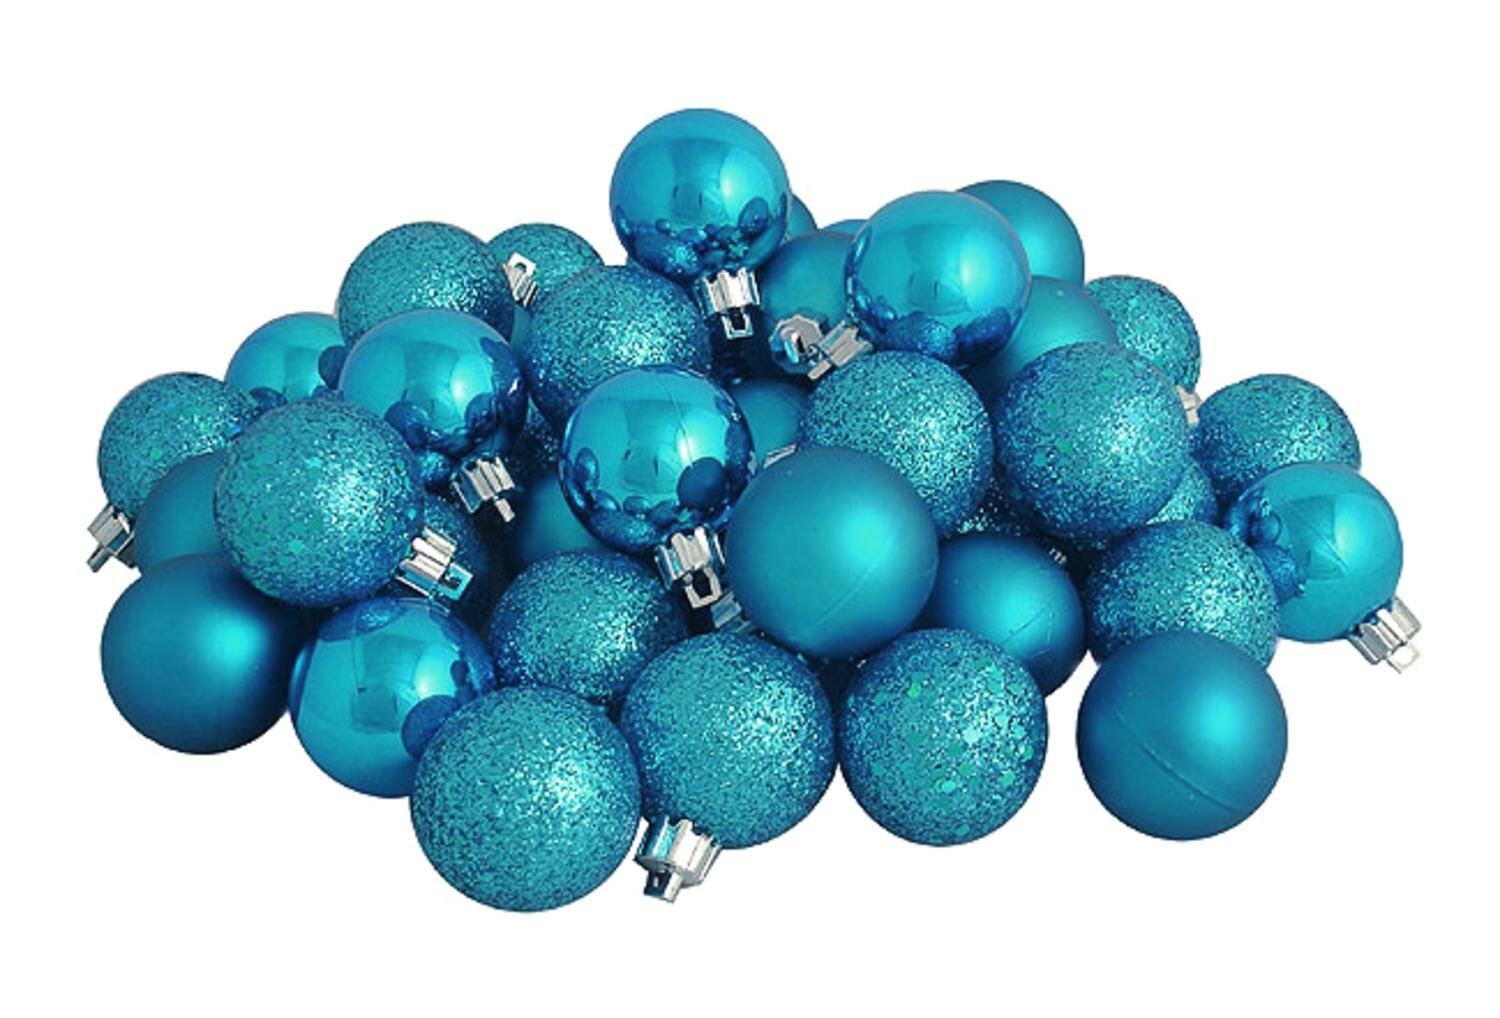 3.9” Shiny/Matte Black Shatterproof Ornaments - Set of 4